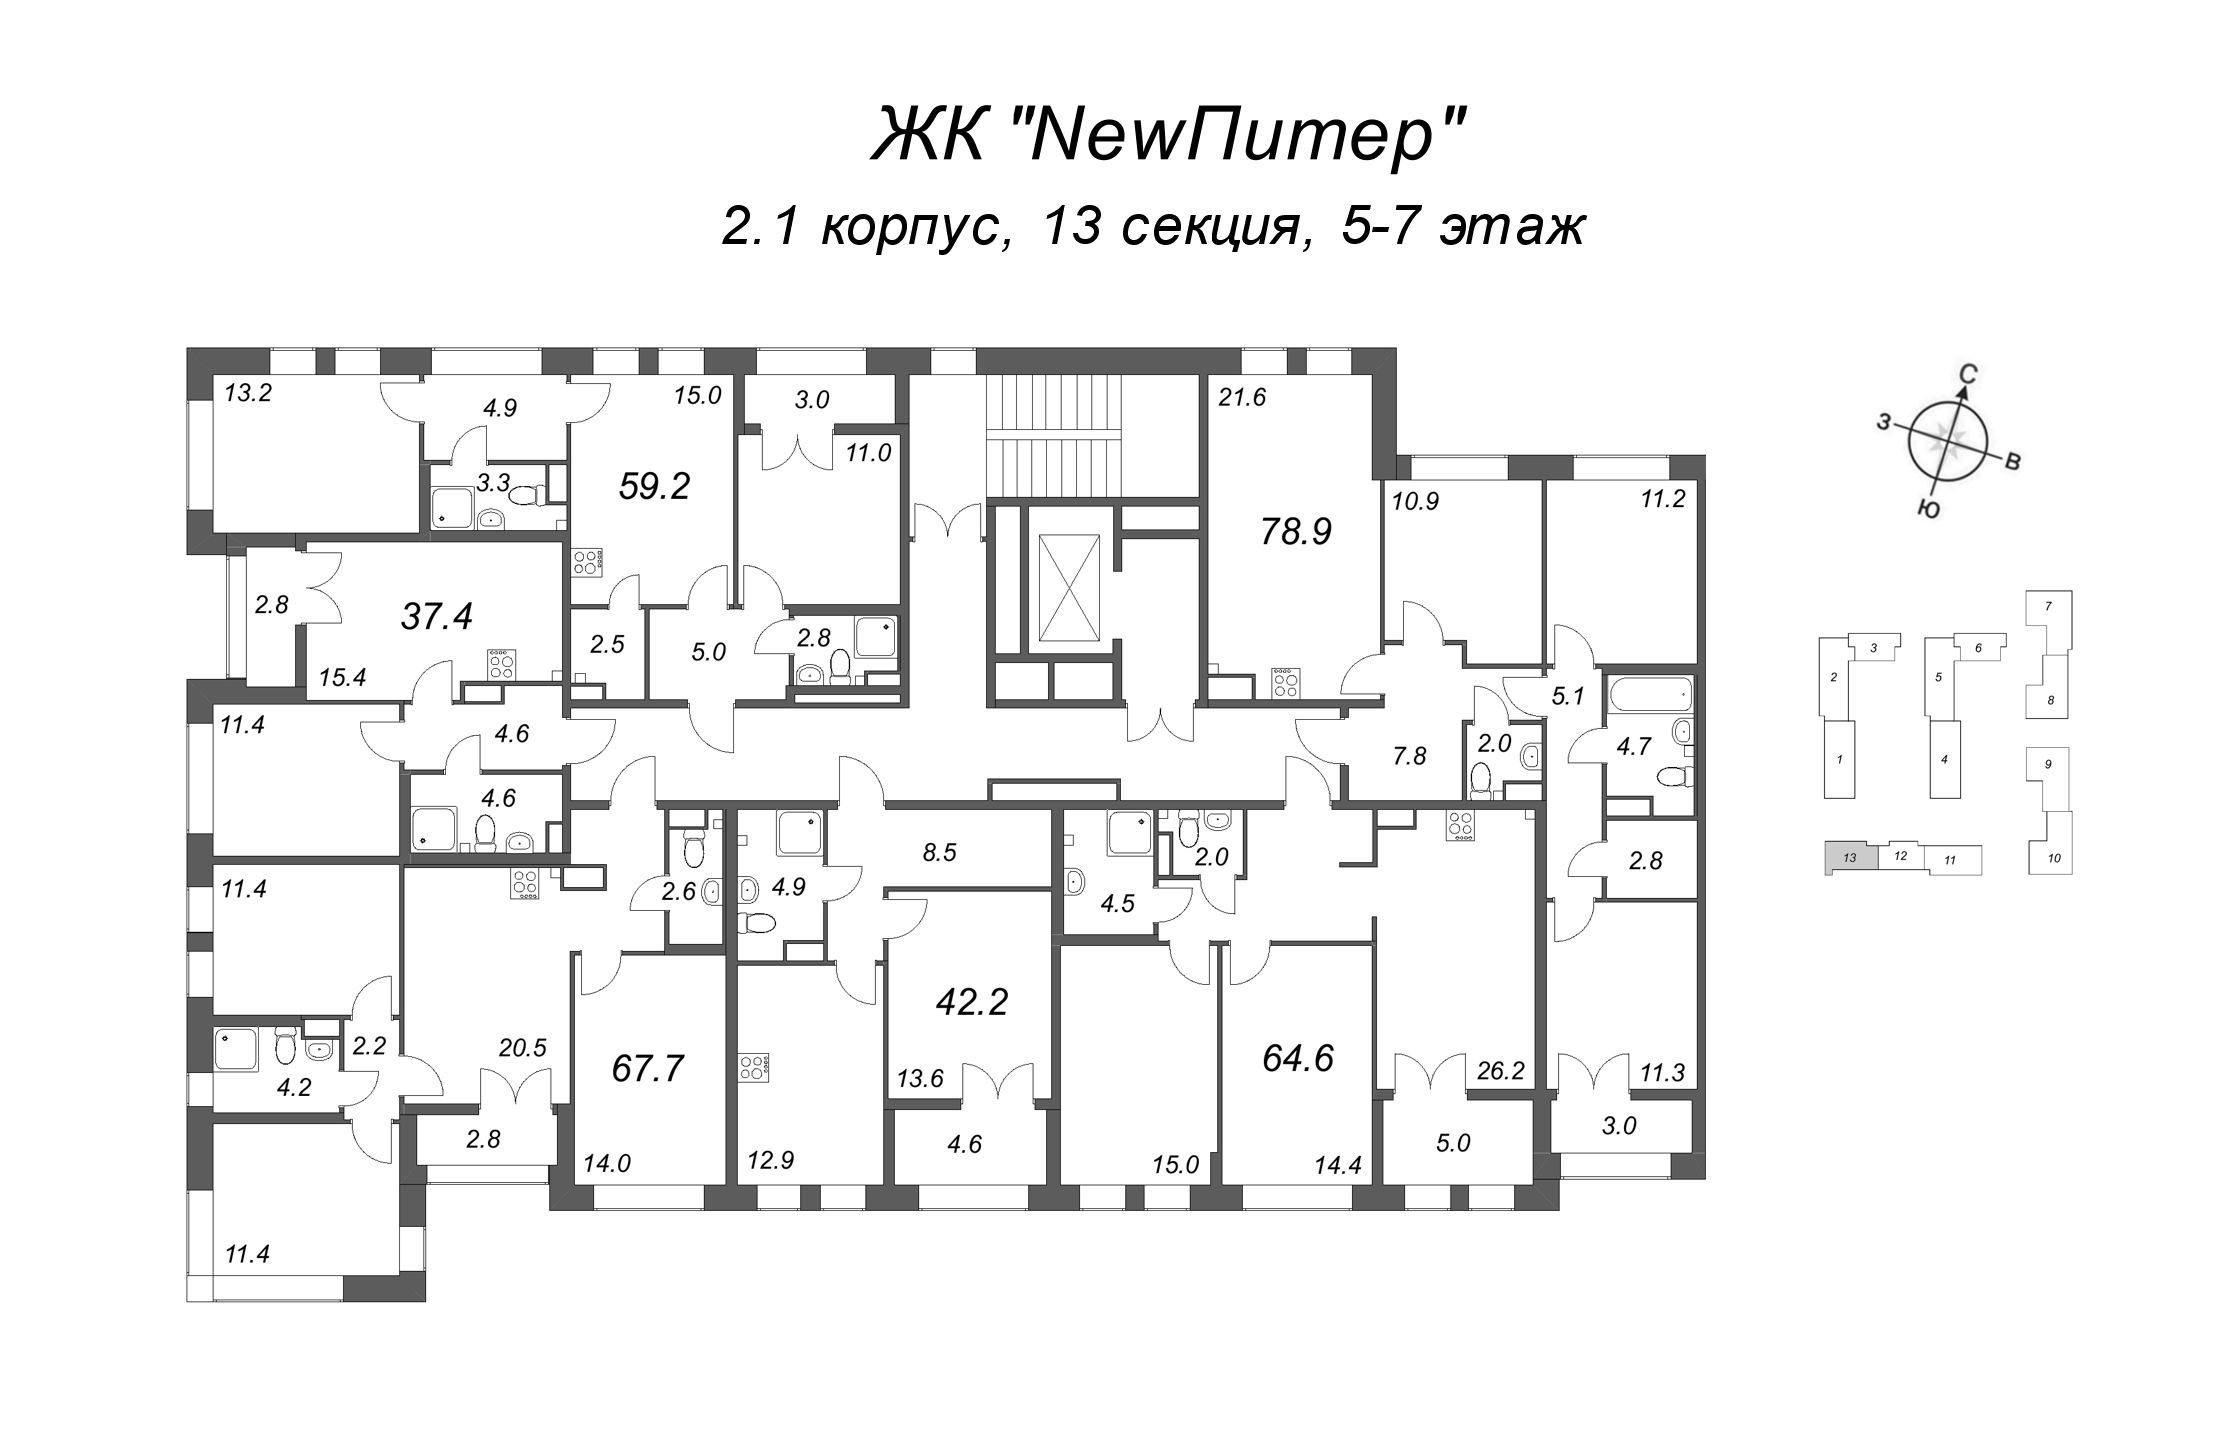 4-комнатная (Евро) квартира, 78.9 м² - планировка этажа